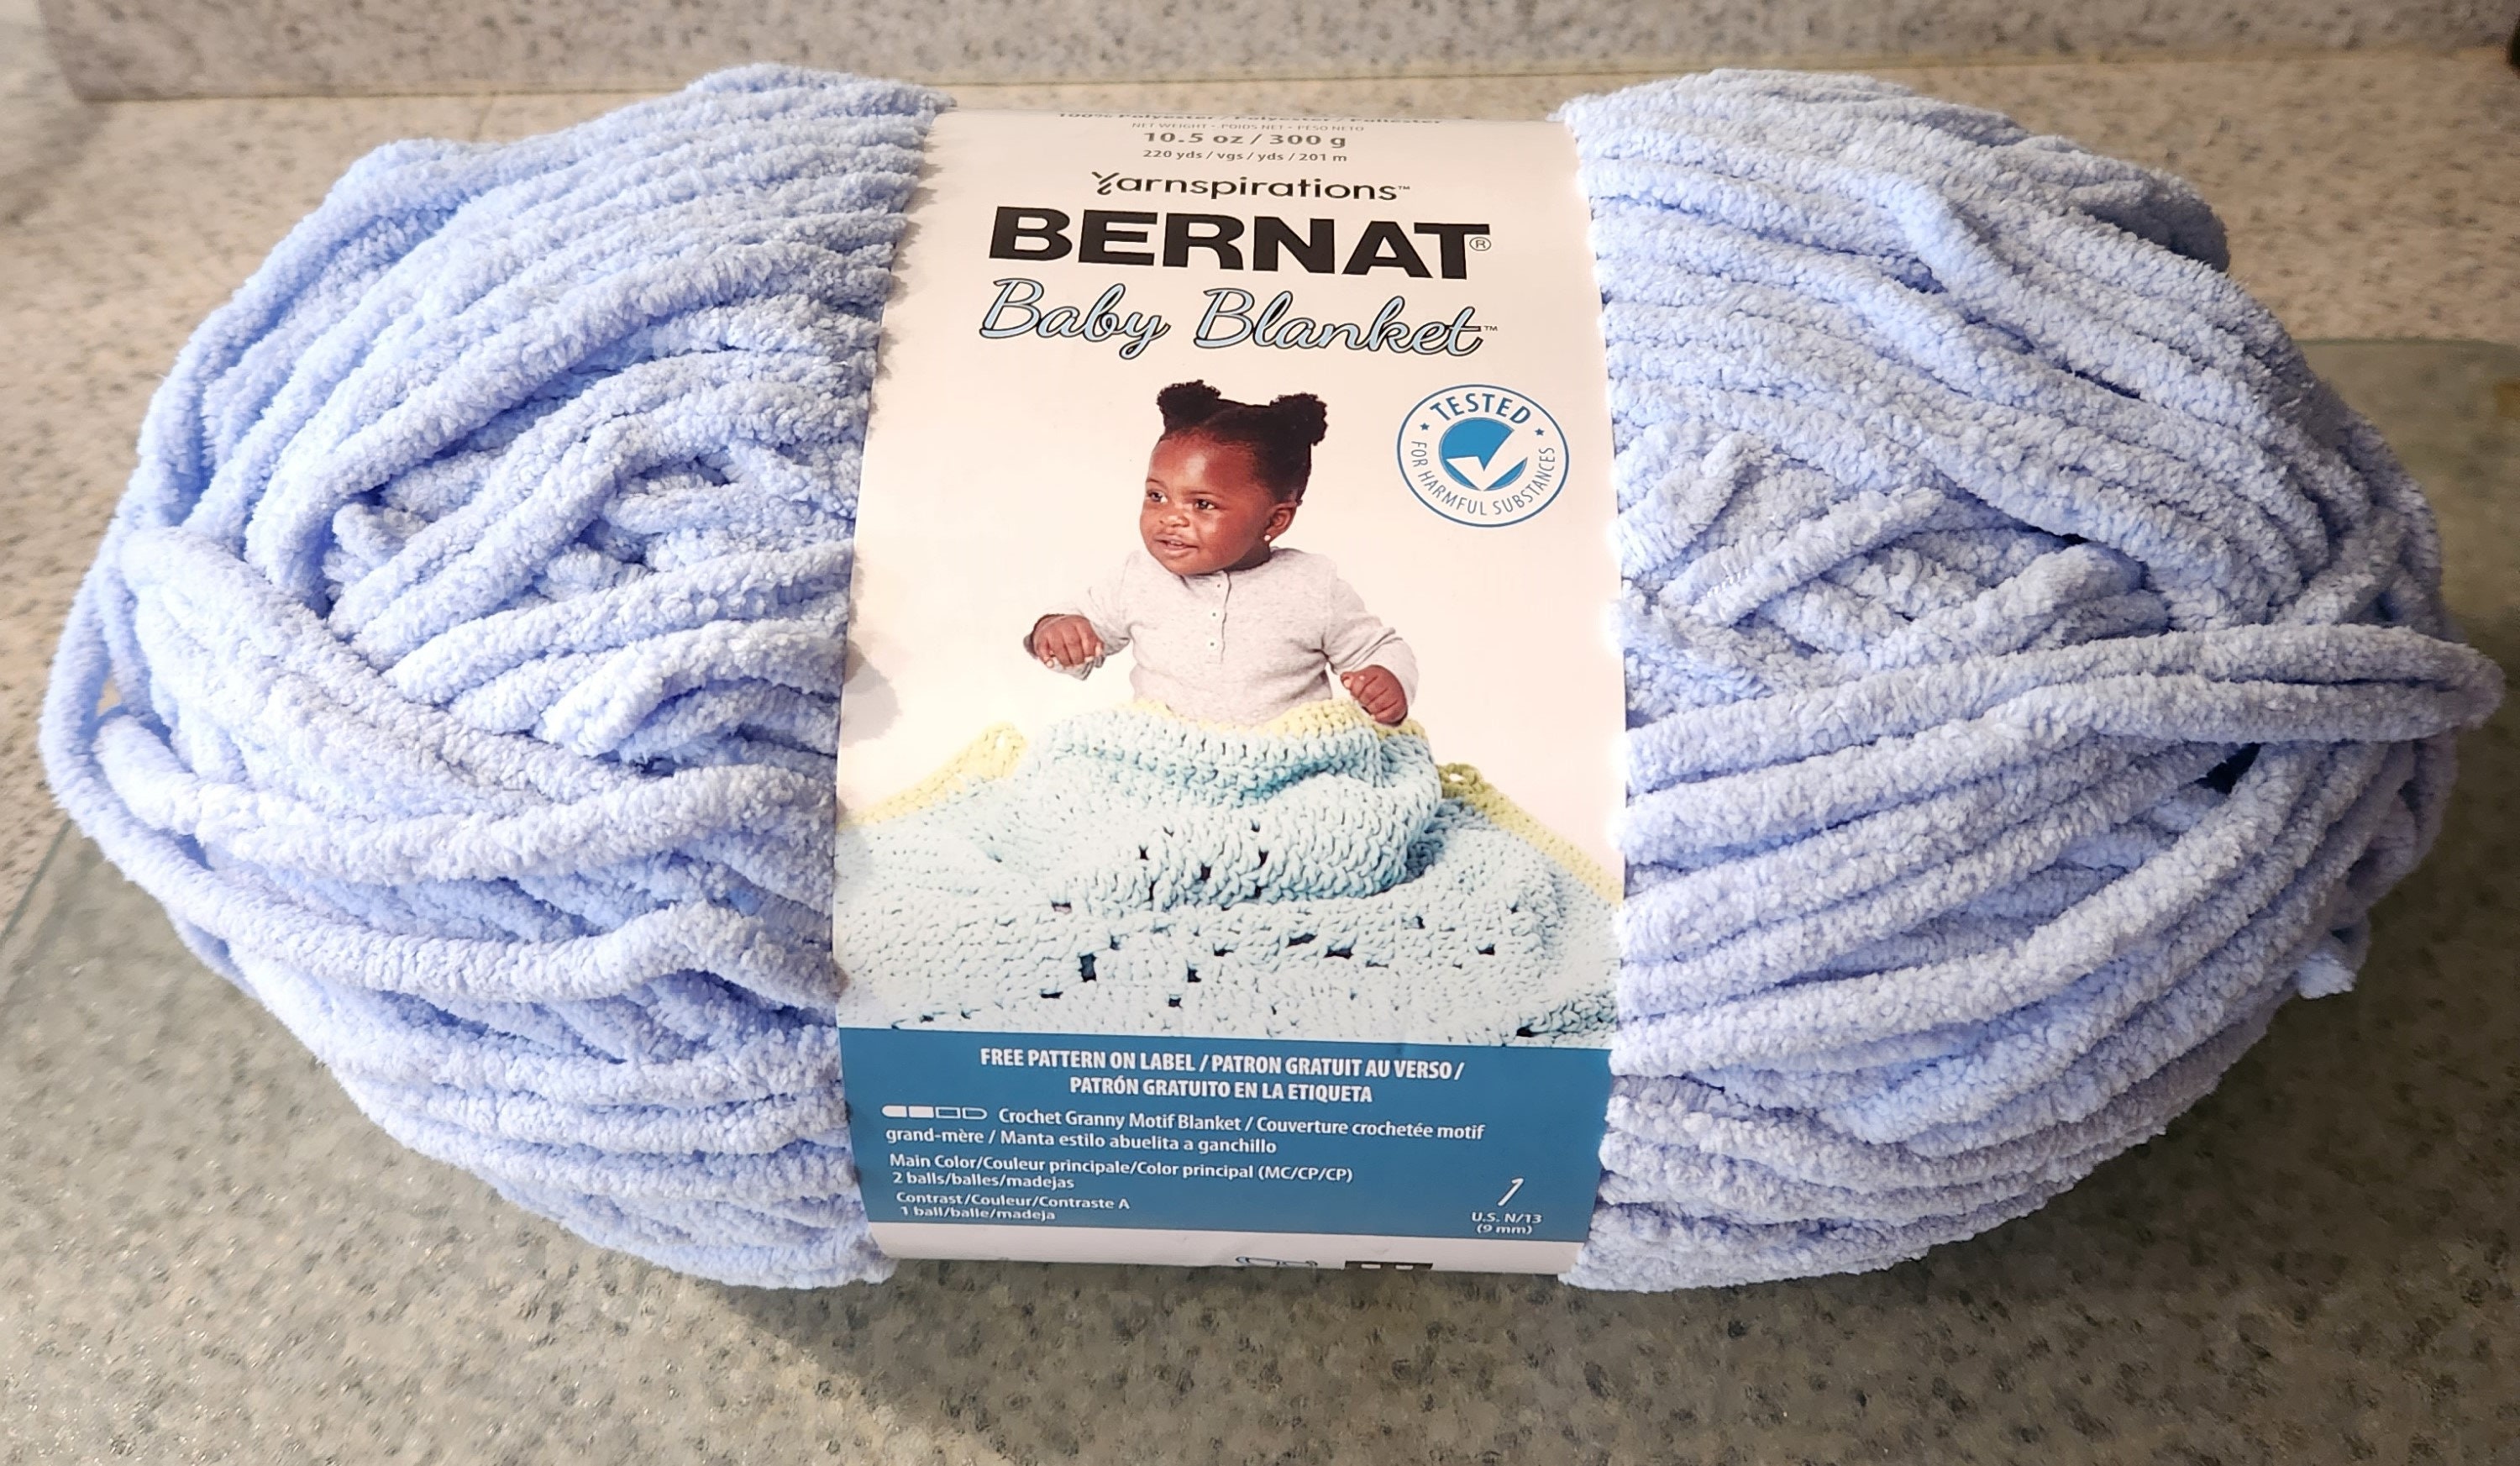 Bernat Bundle Up Big Ball 8.8 oz Lilac Knitting & Crochet Yarn